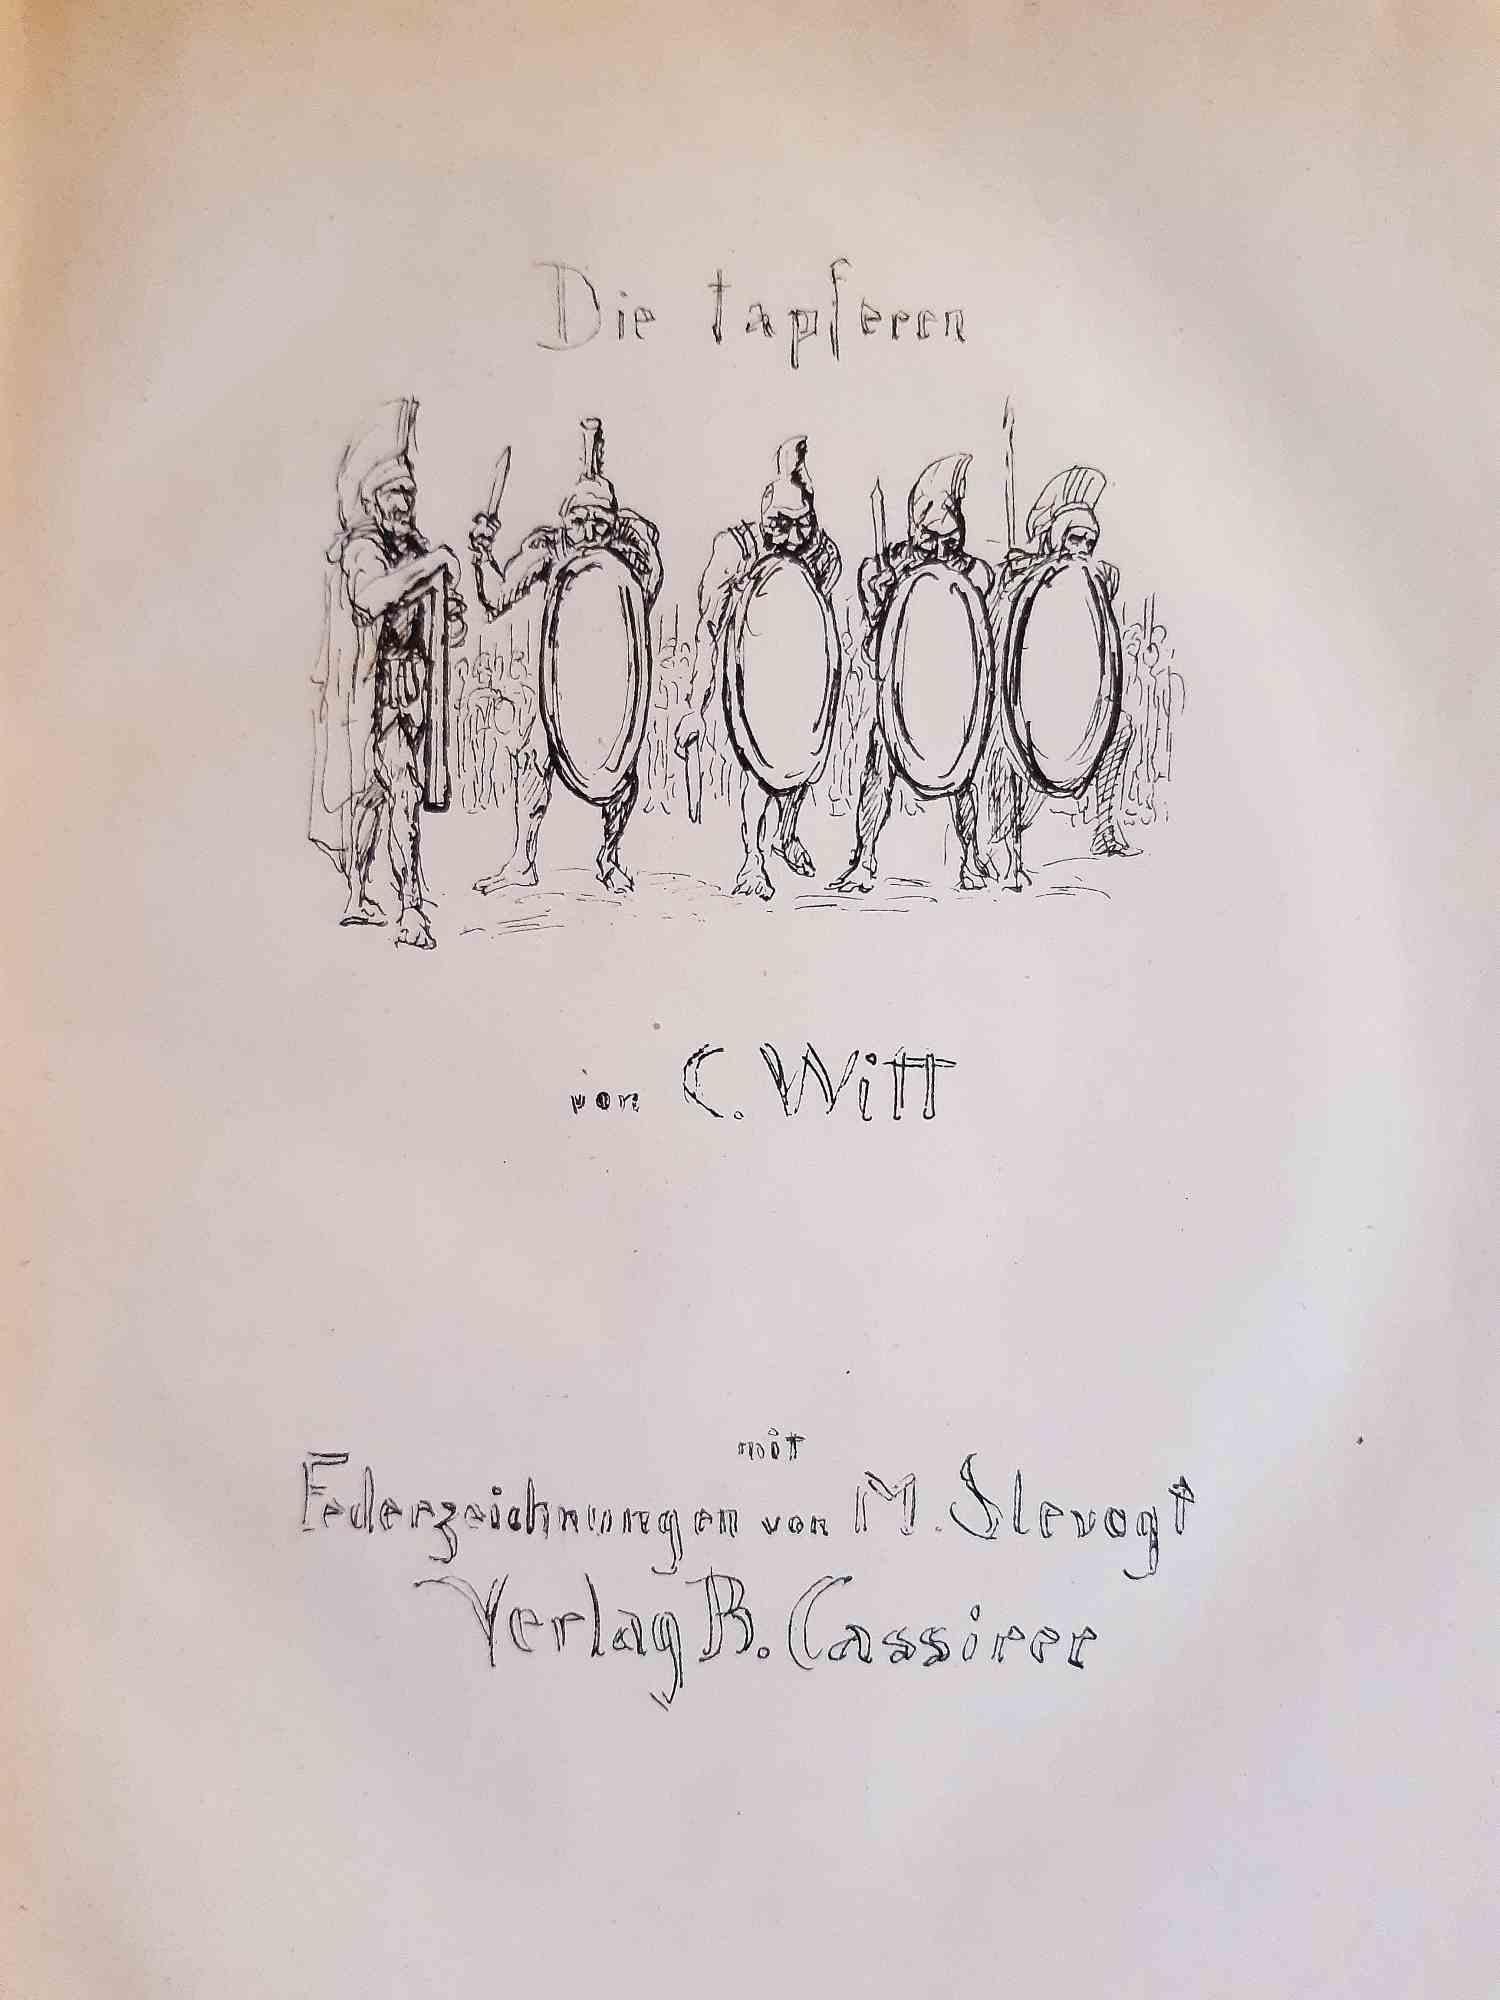 Die Tapferen Zehntausend - Original Rare Book Illustrated by Max Slevogt - 1921 For Sale 2